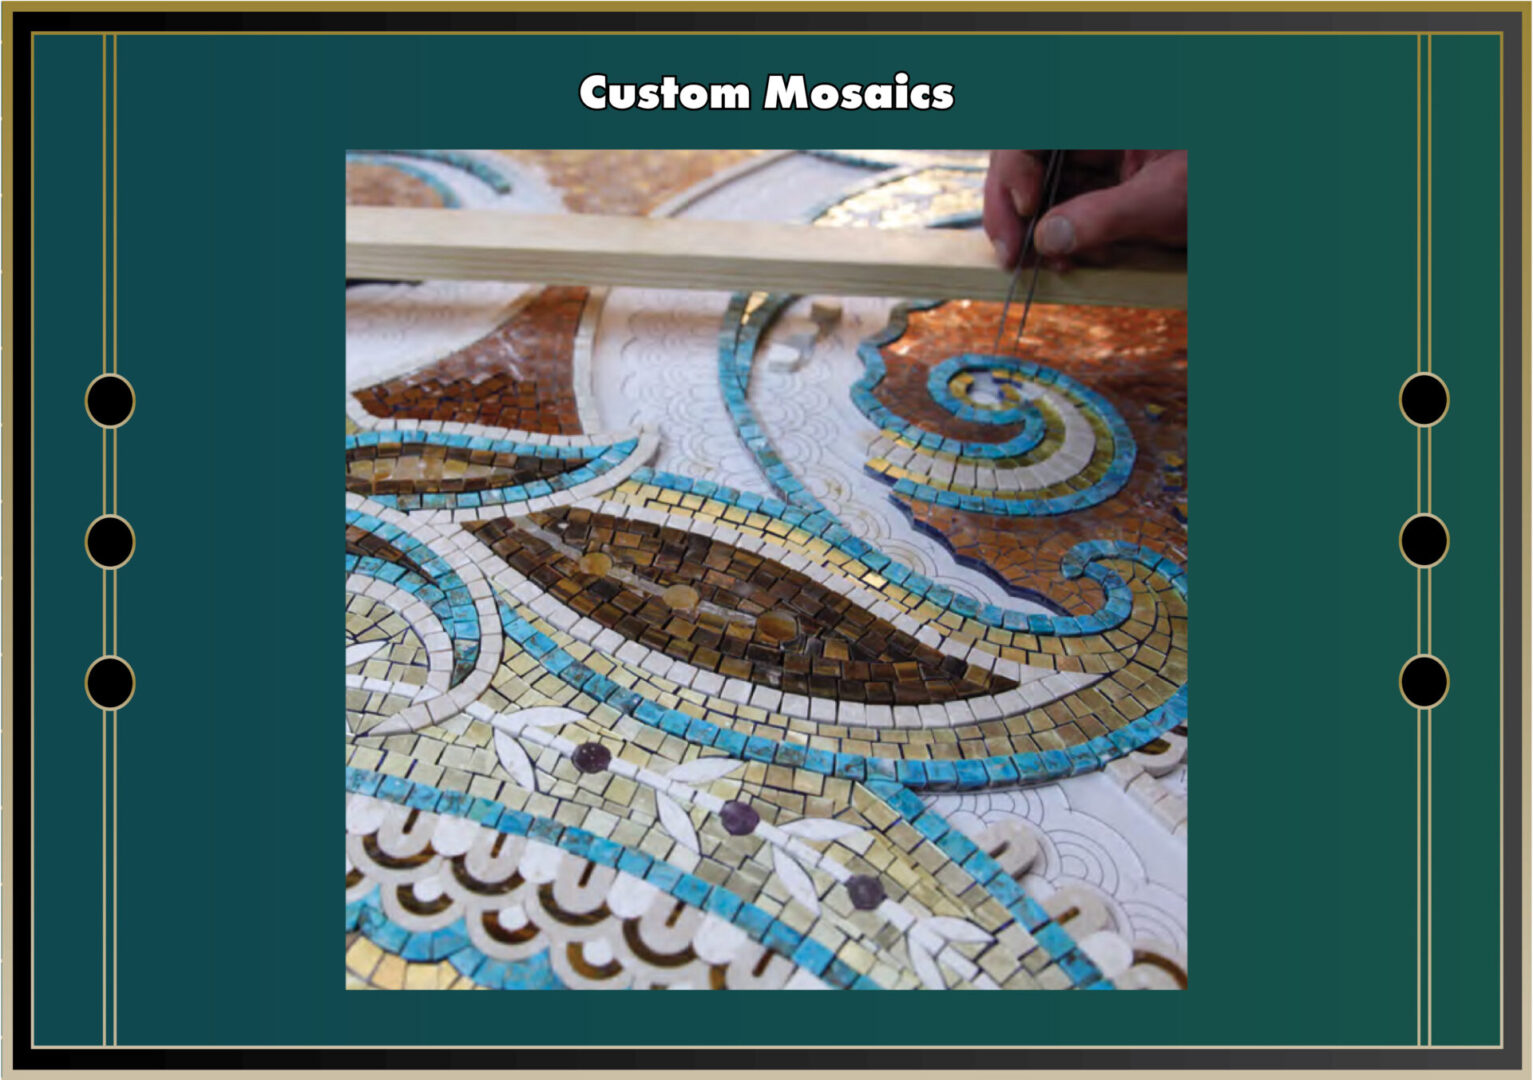 Custom Mosaics being created at Streamline Modern